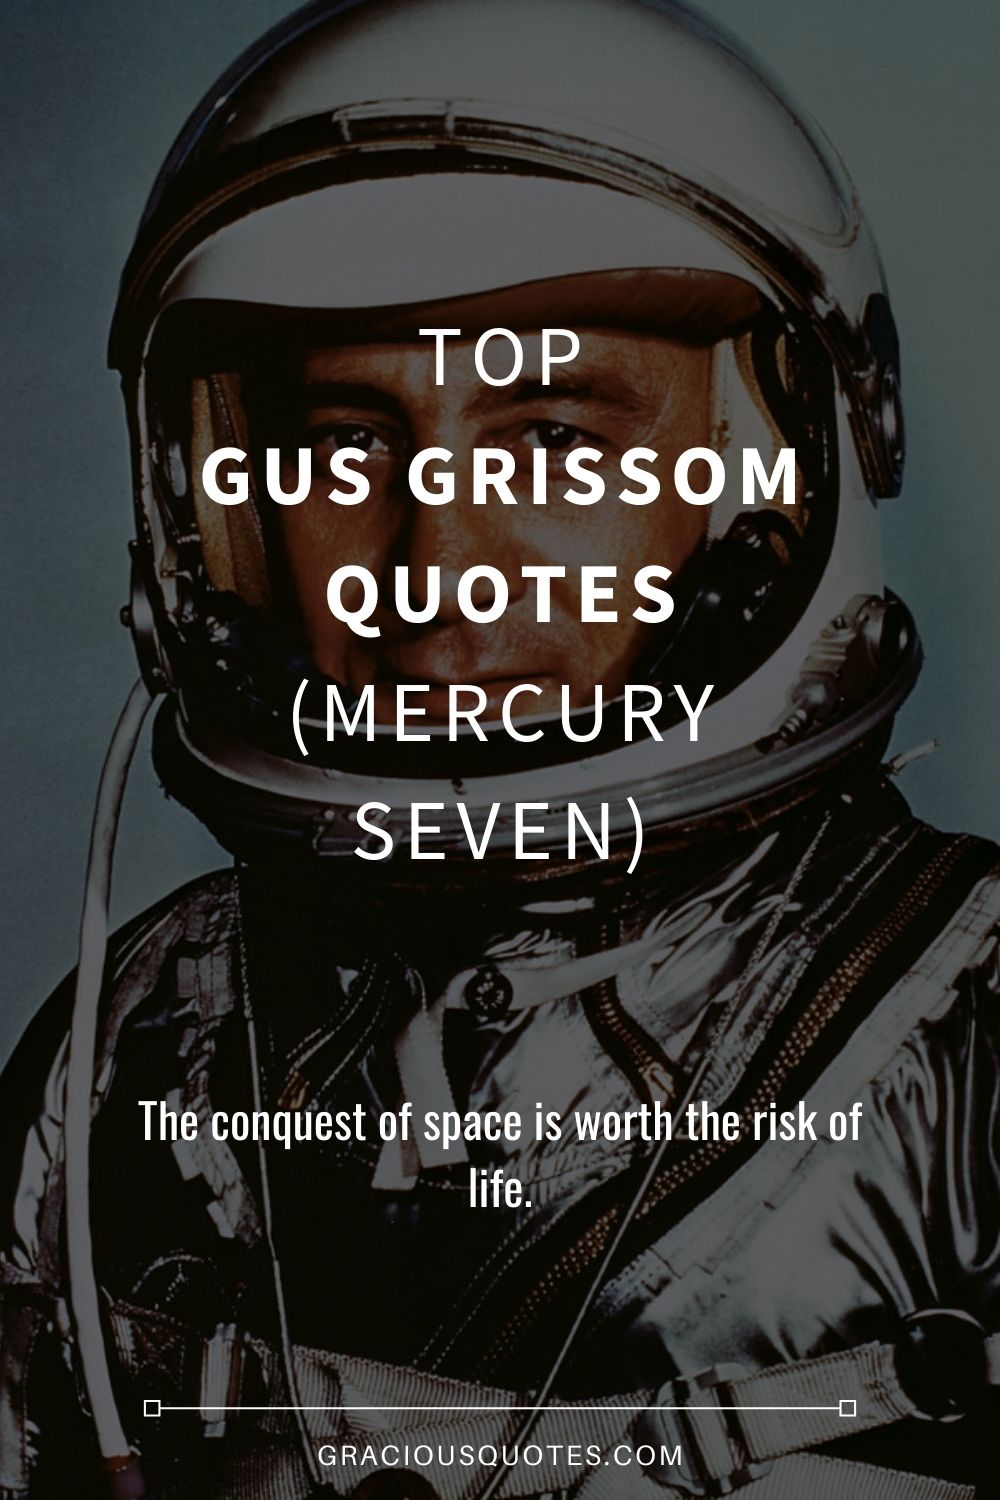 Top Gus Grissom Quotes (MERCURY SEVEN) - Gracious Quotes